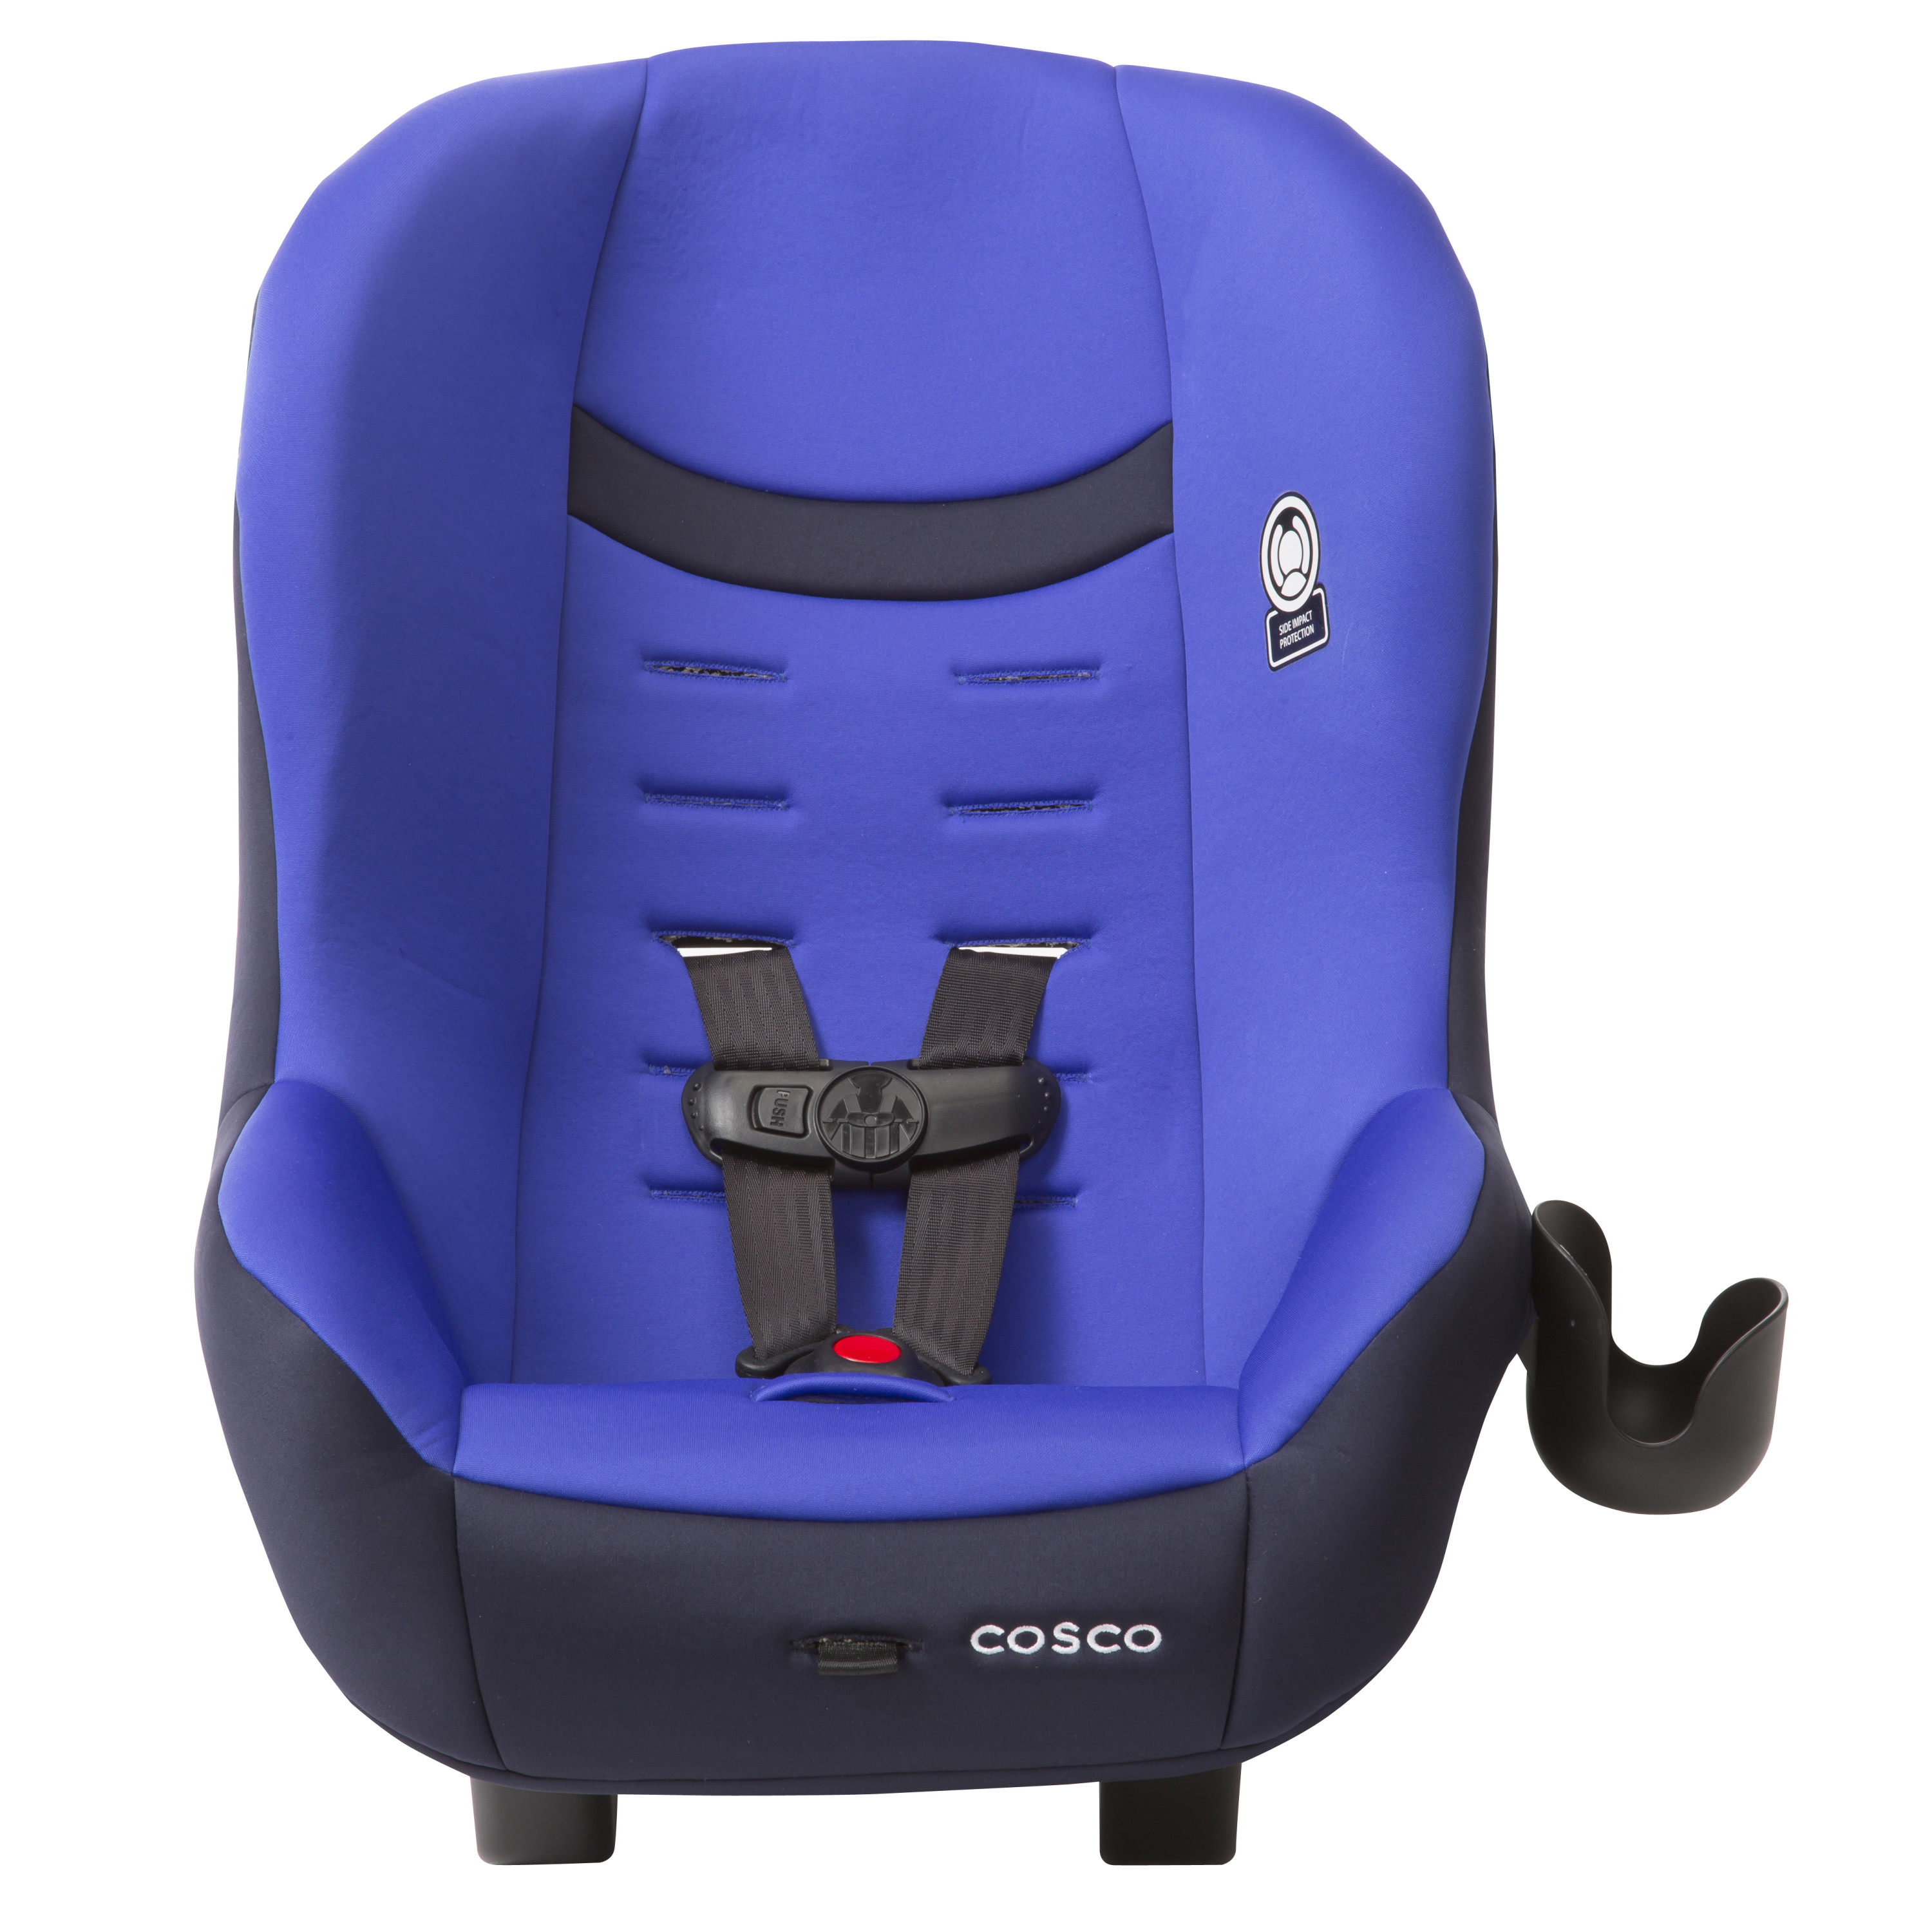 Cosco Scenera Convertible Car Seat, Solid Print Blue - image 4 of 7